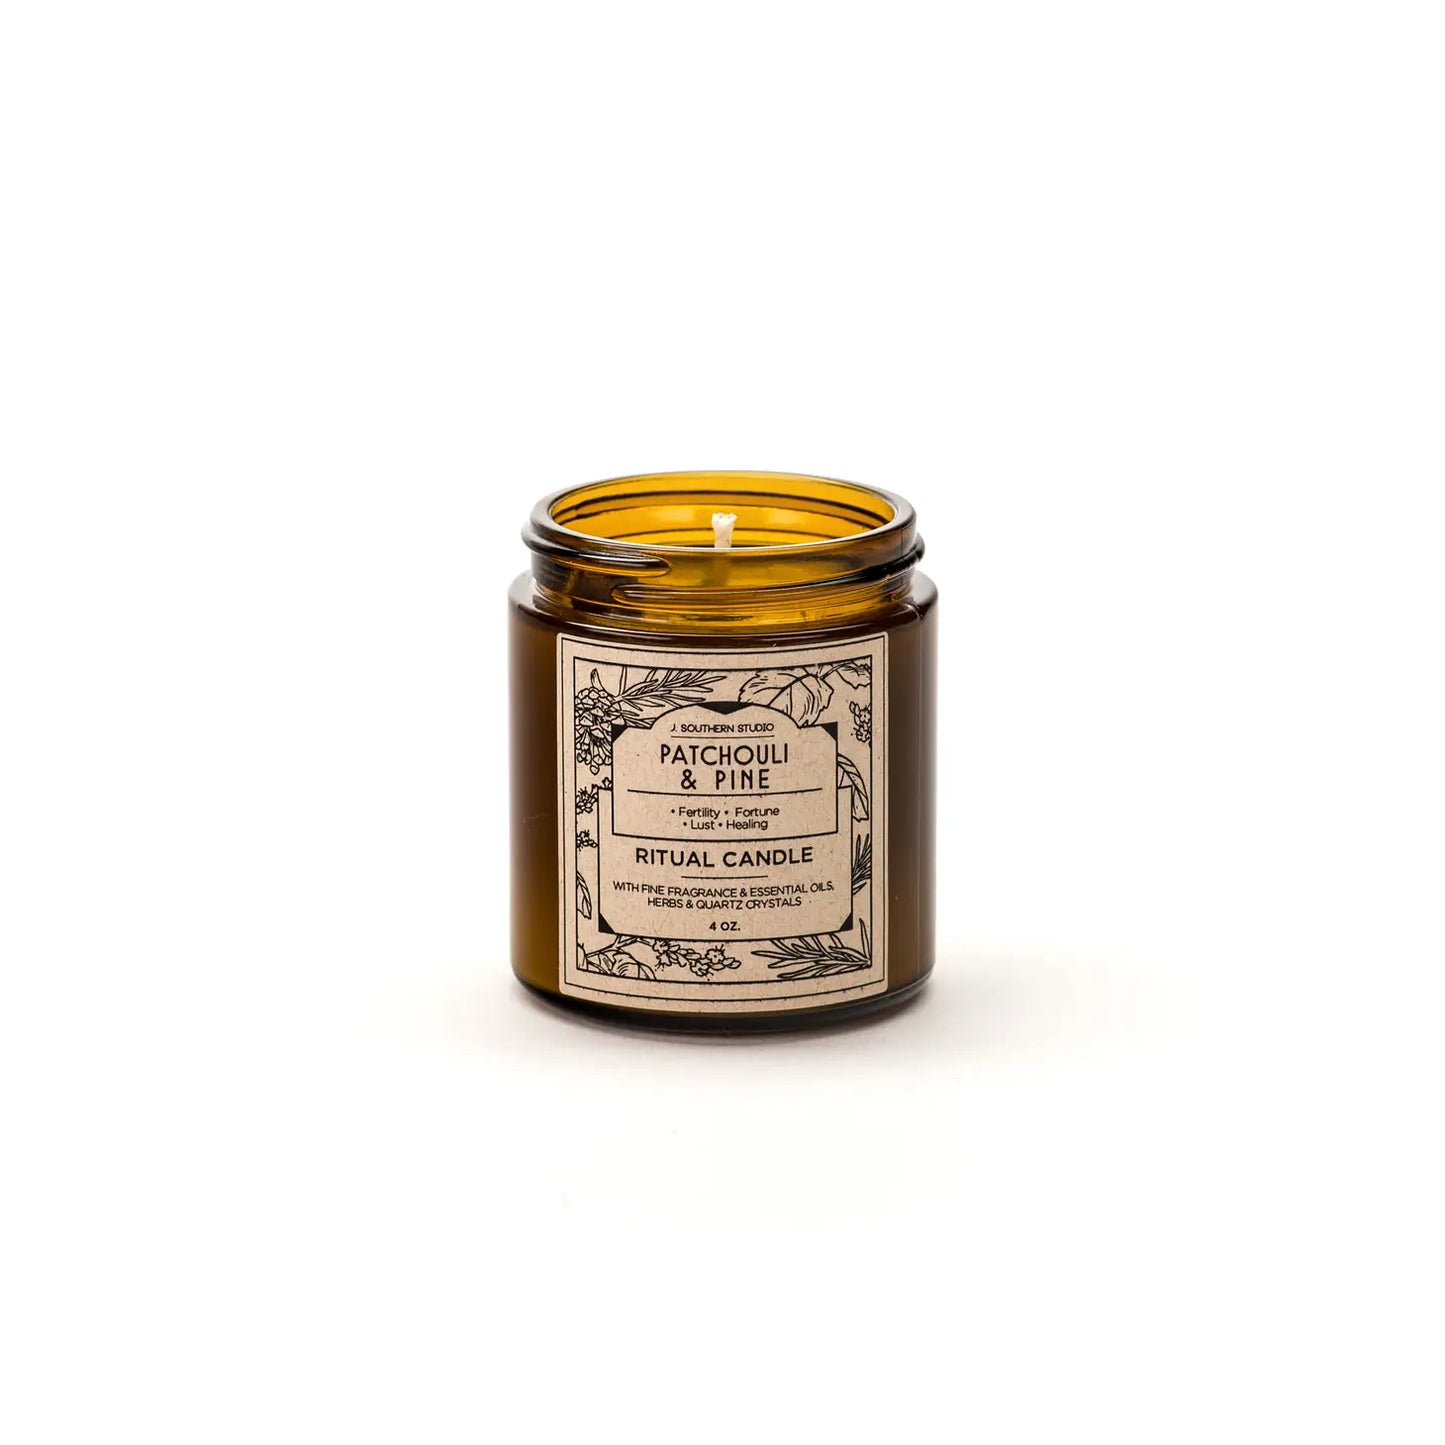 Patchouli and Pine Ritual Candle - 4 oz. Amber Glass Jar